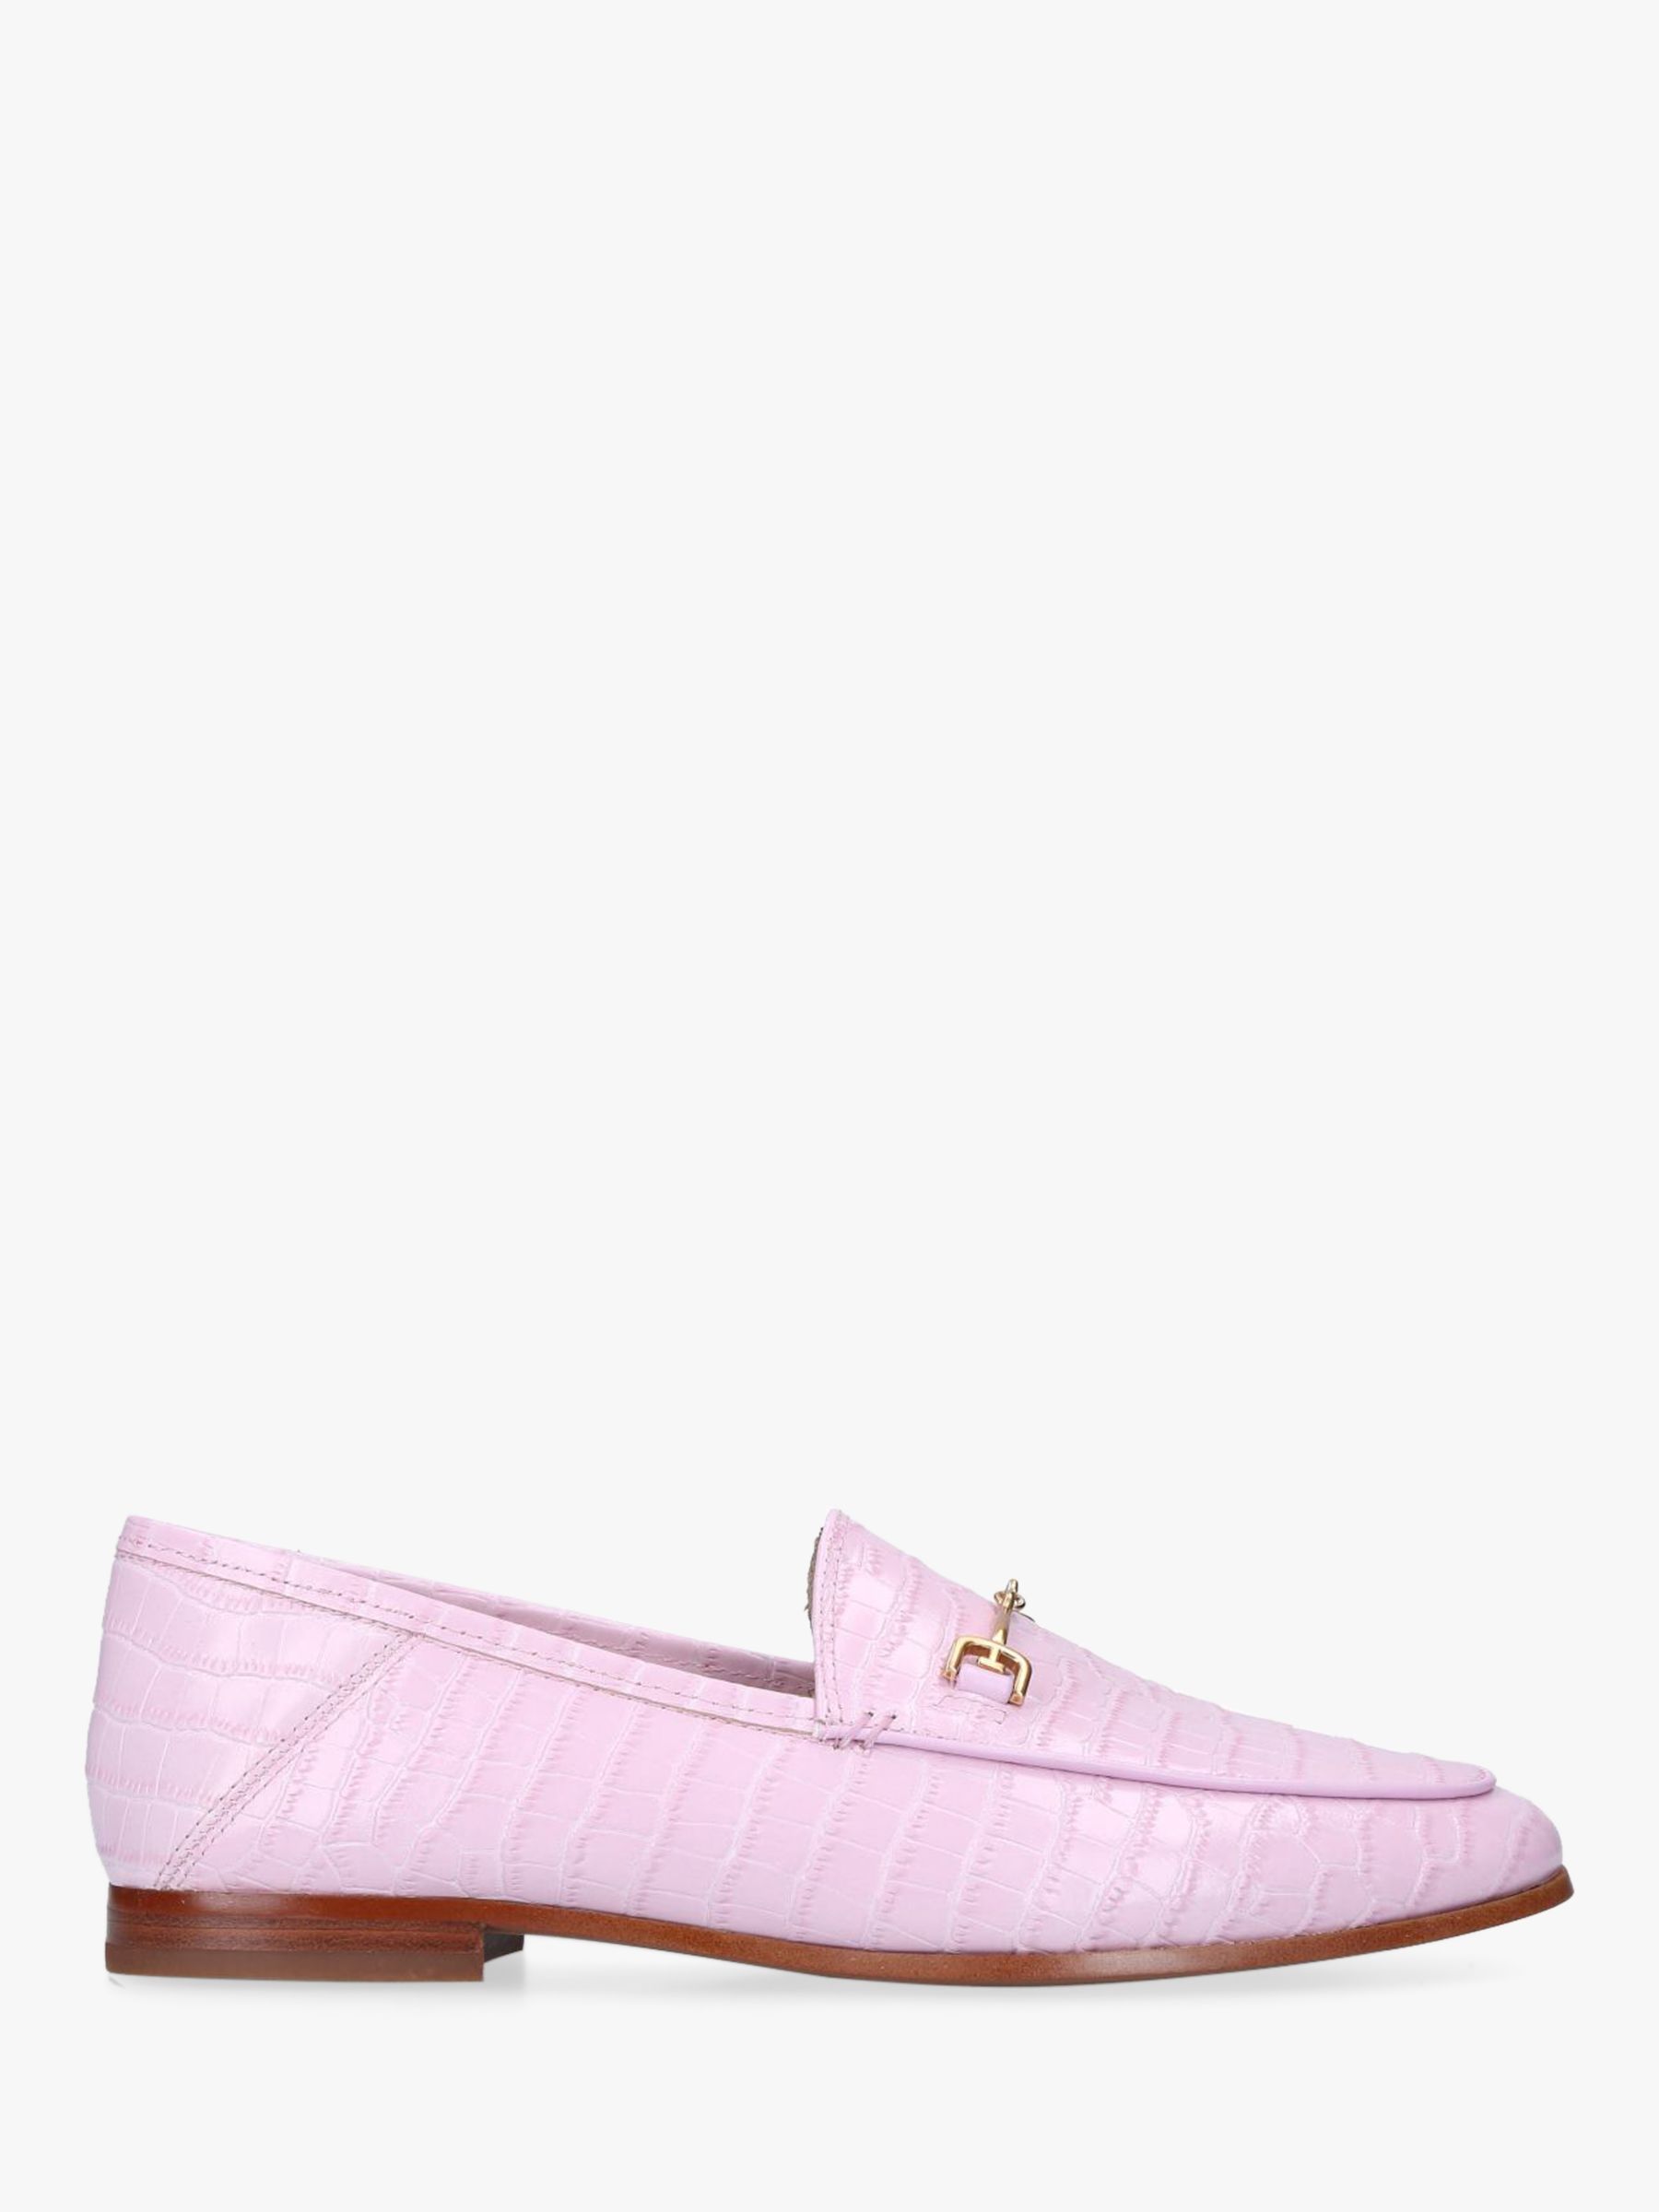 ladies pink loafers uk